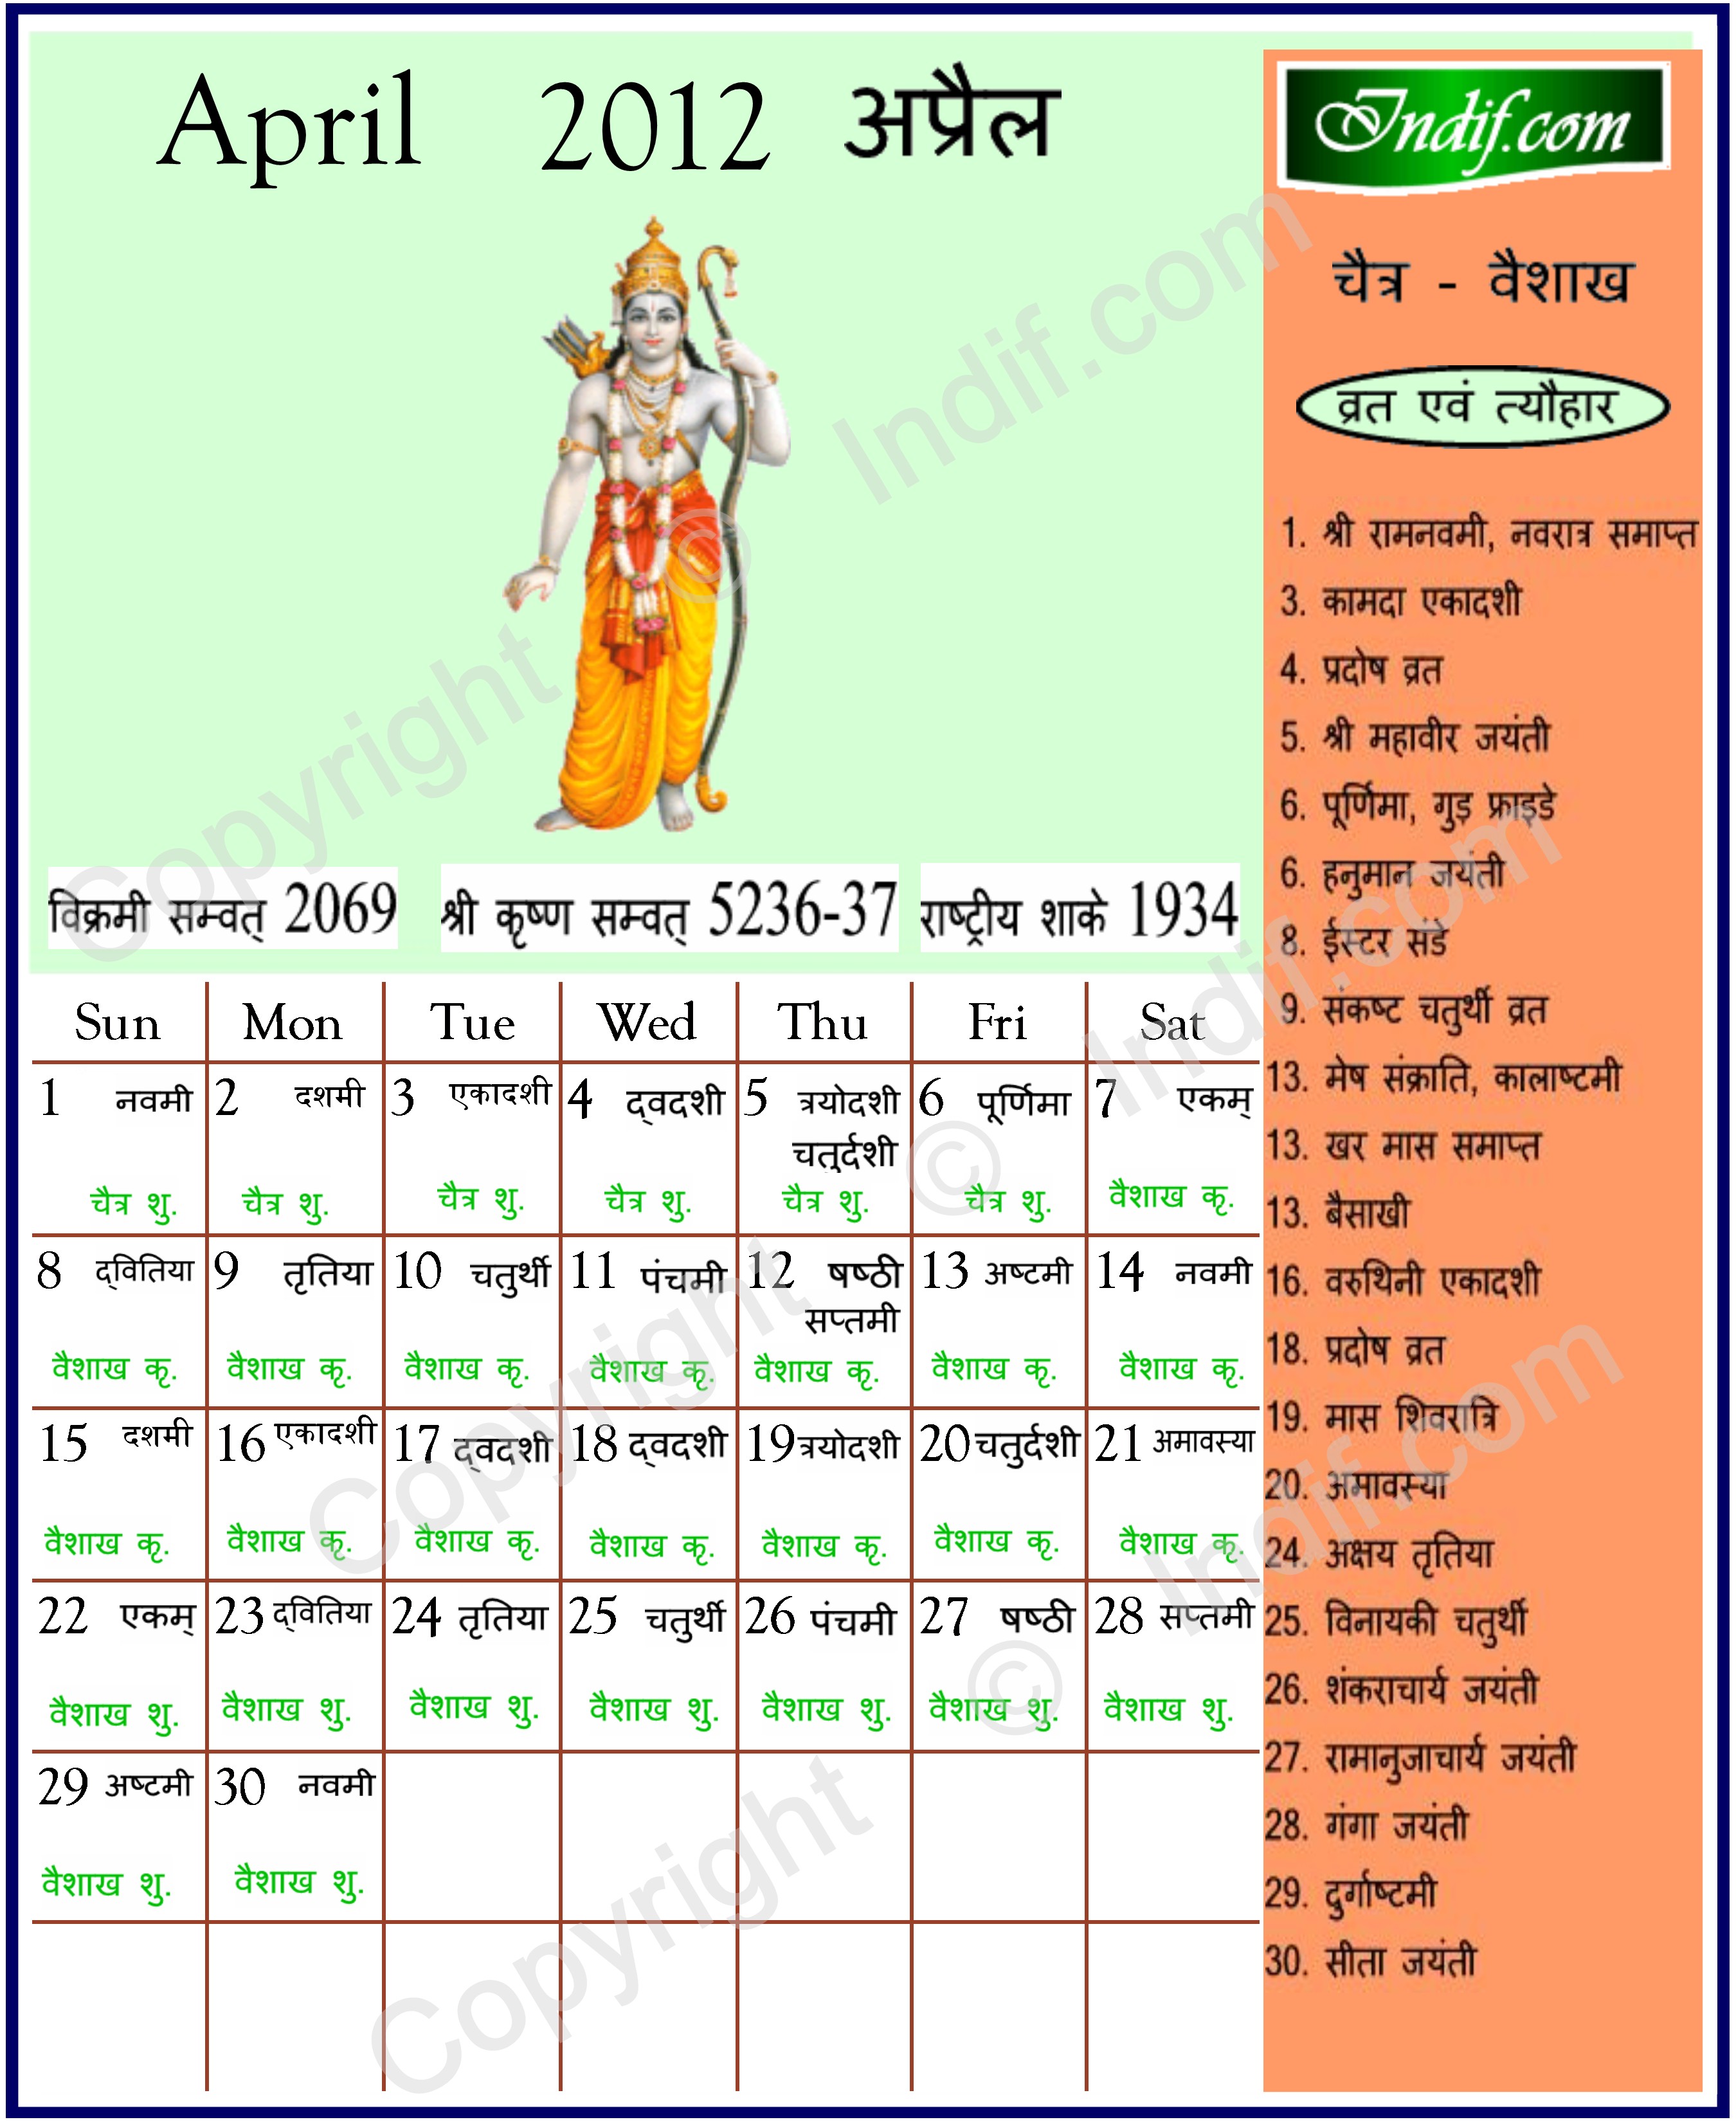 Hindu Calendar April 2012